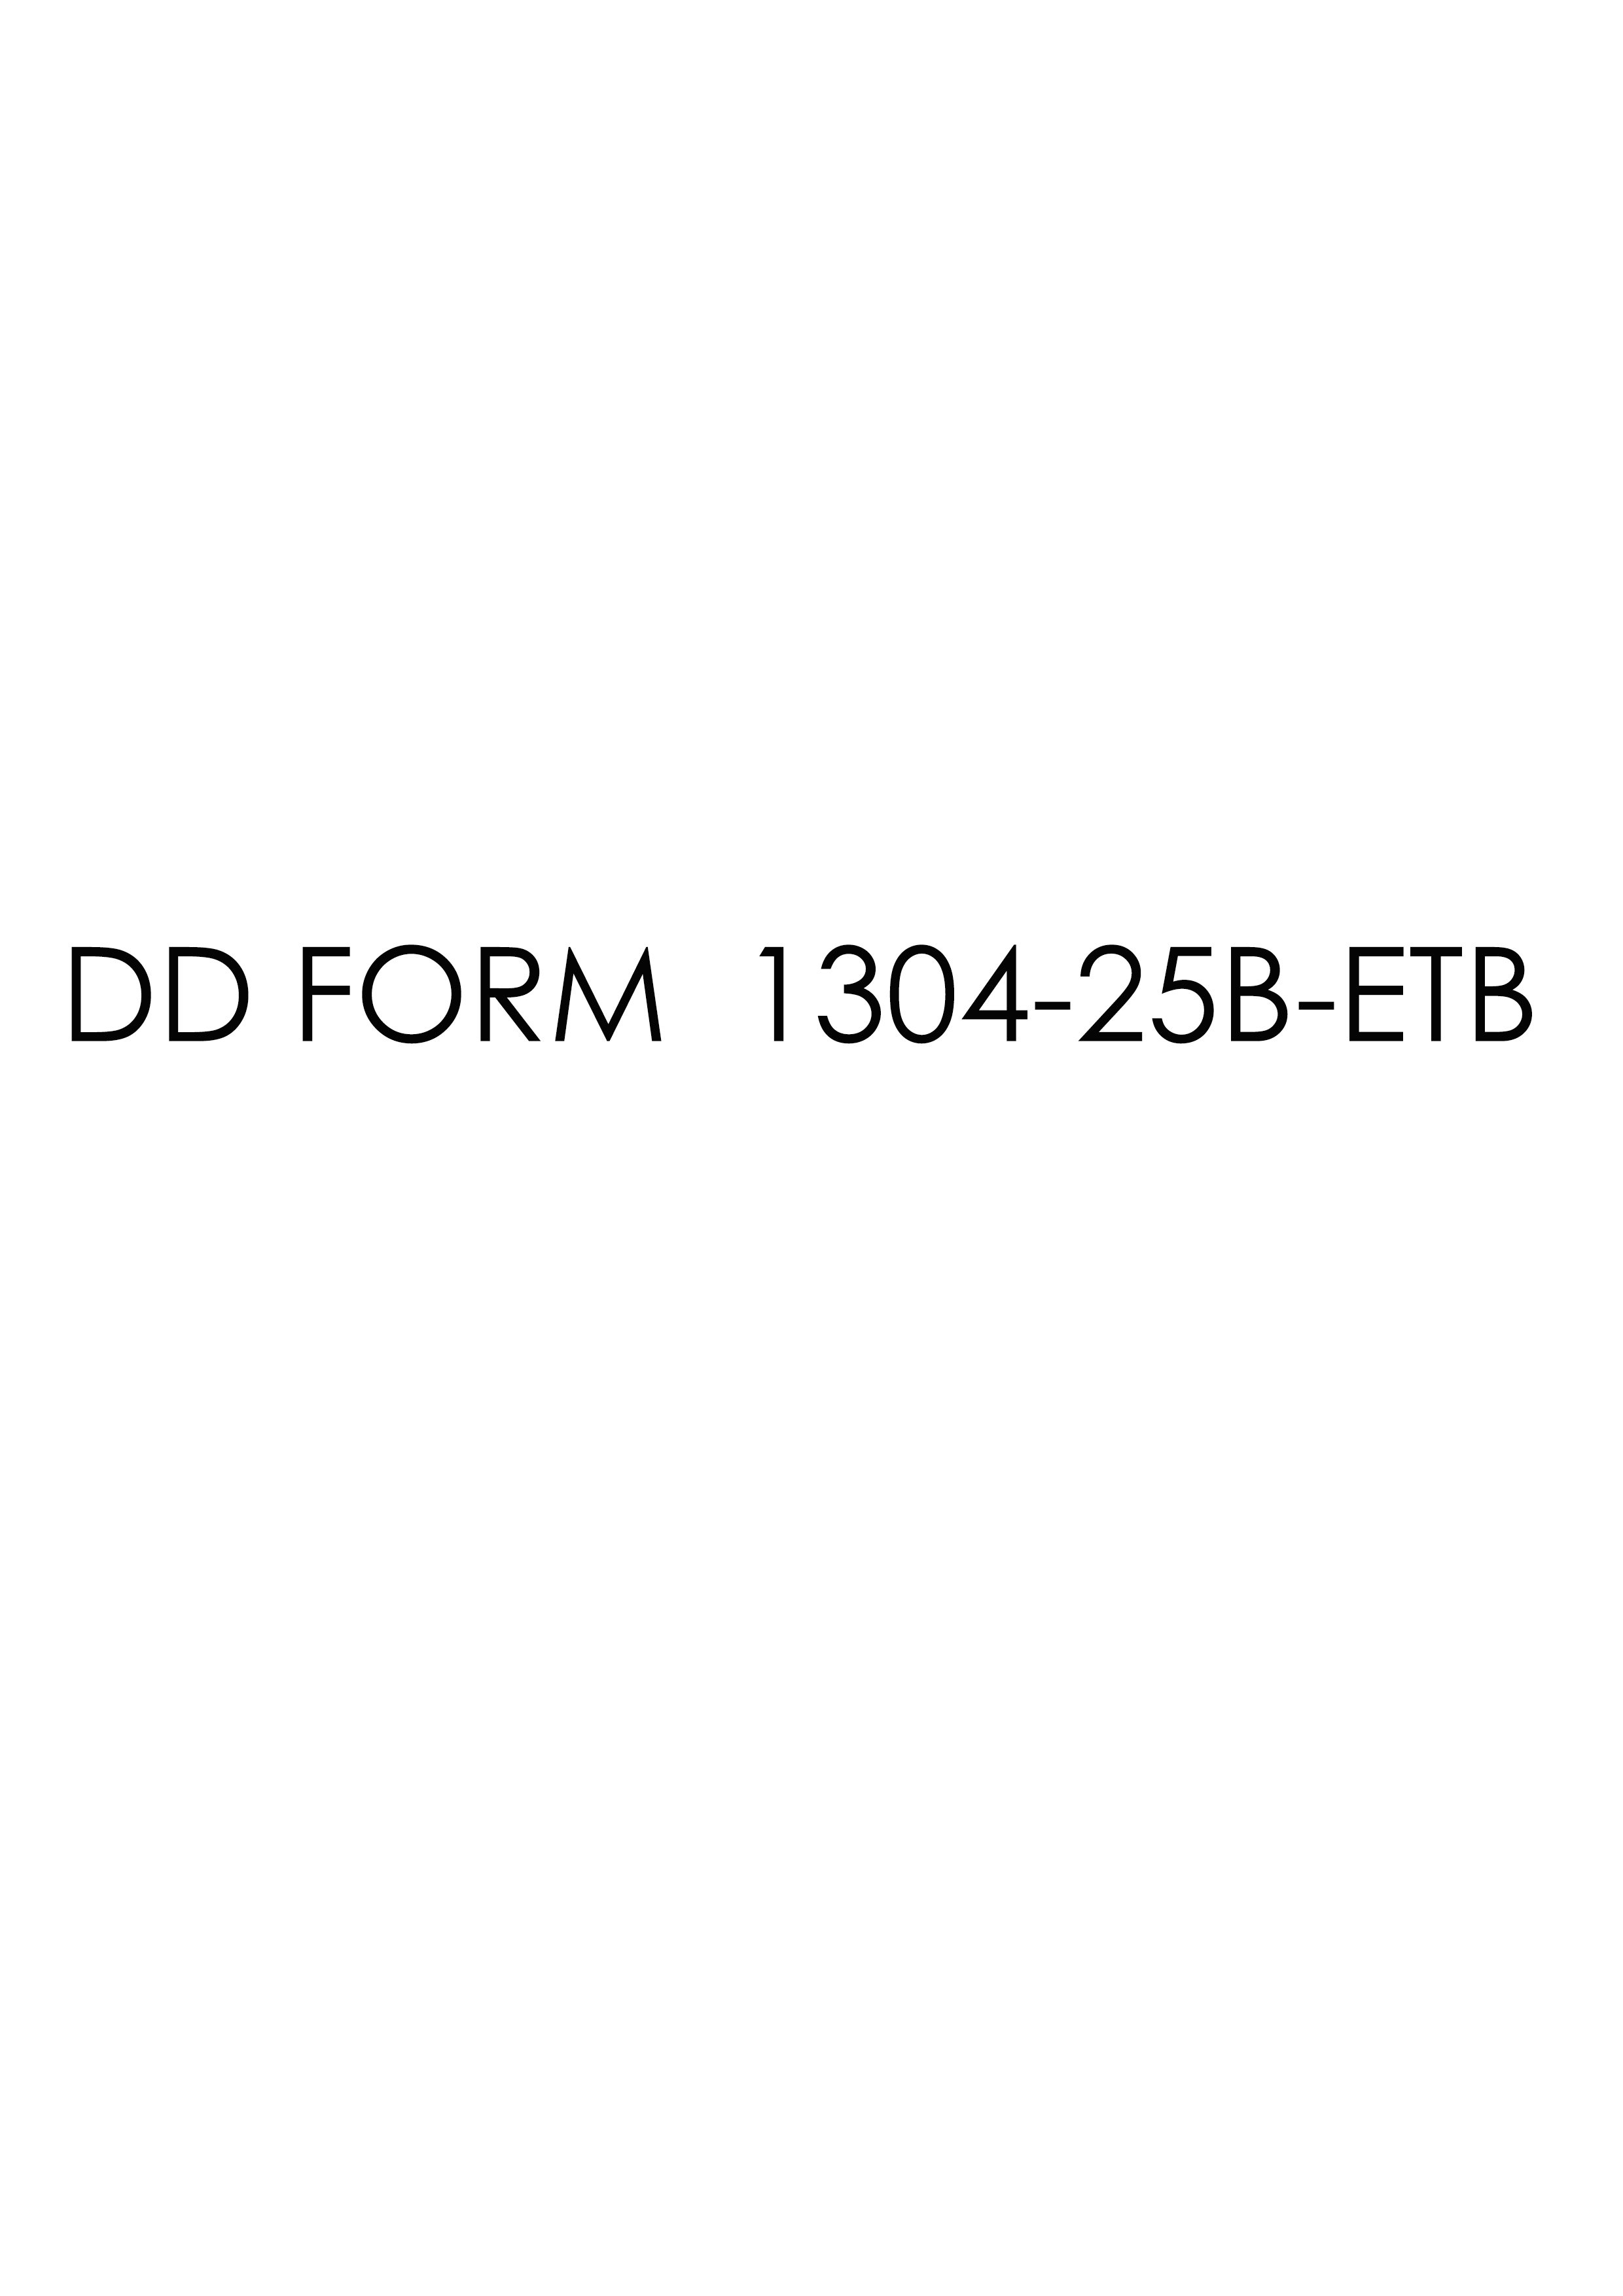 Download Fillable dd Form 1304-25B-ETB